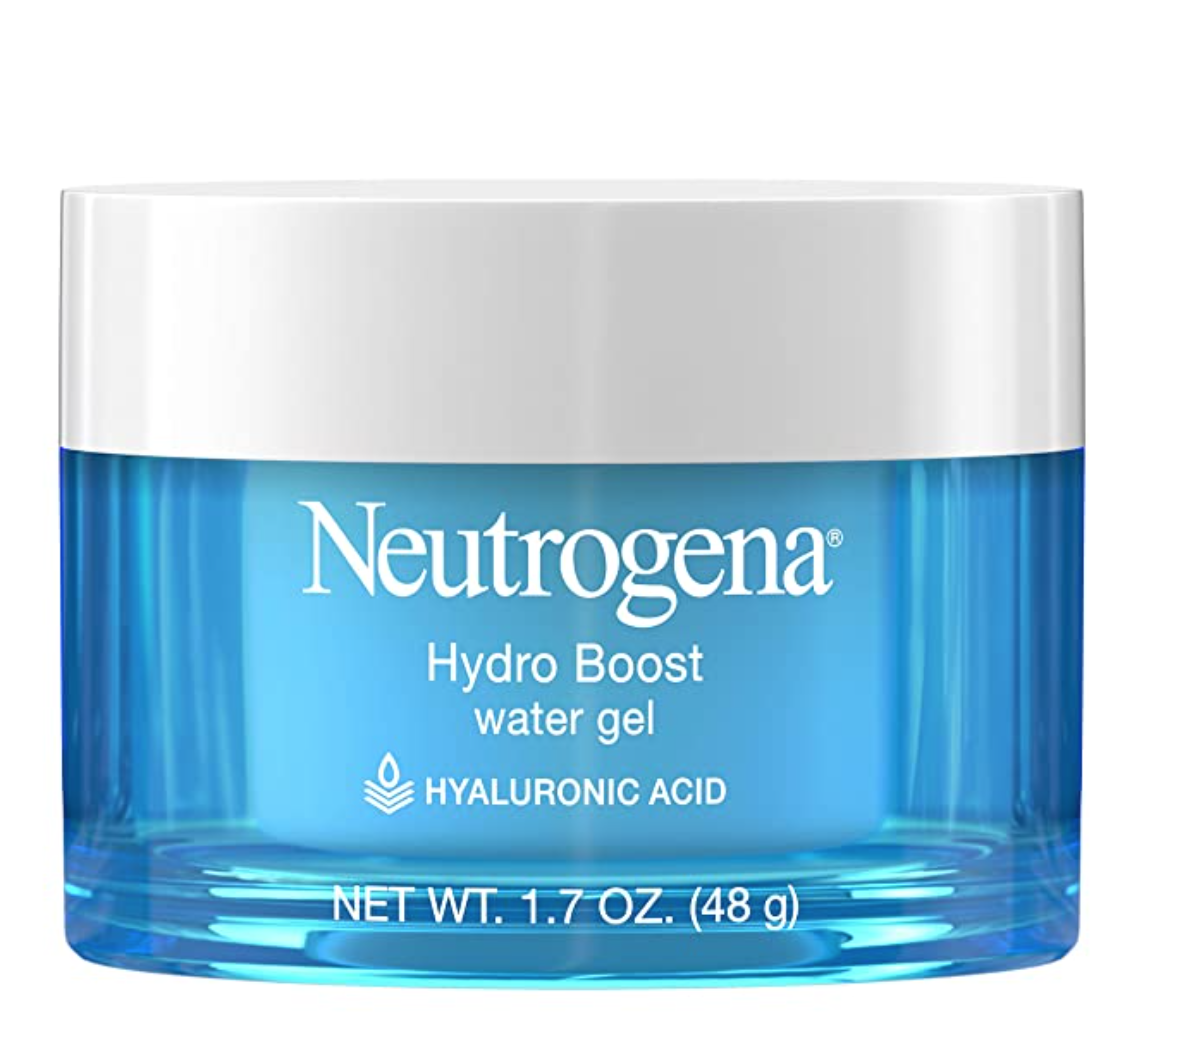 neutrogena best drugstore skincare product dry skin